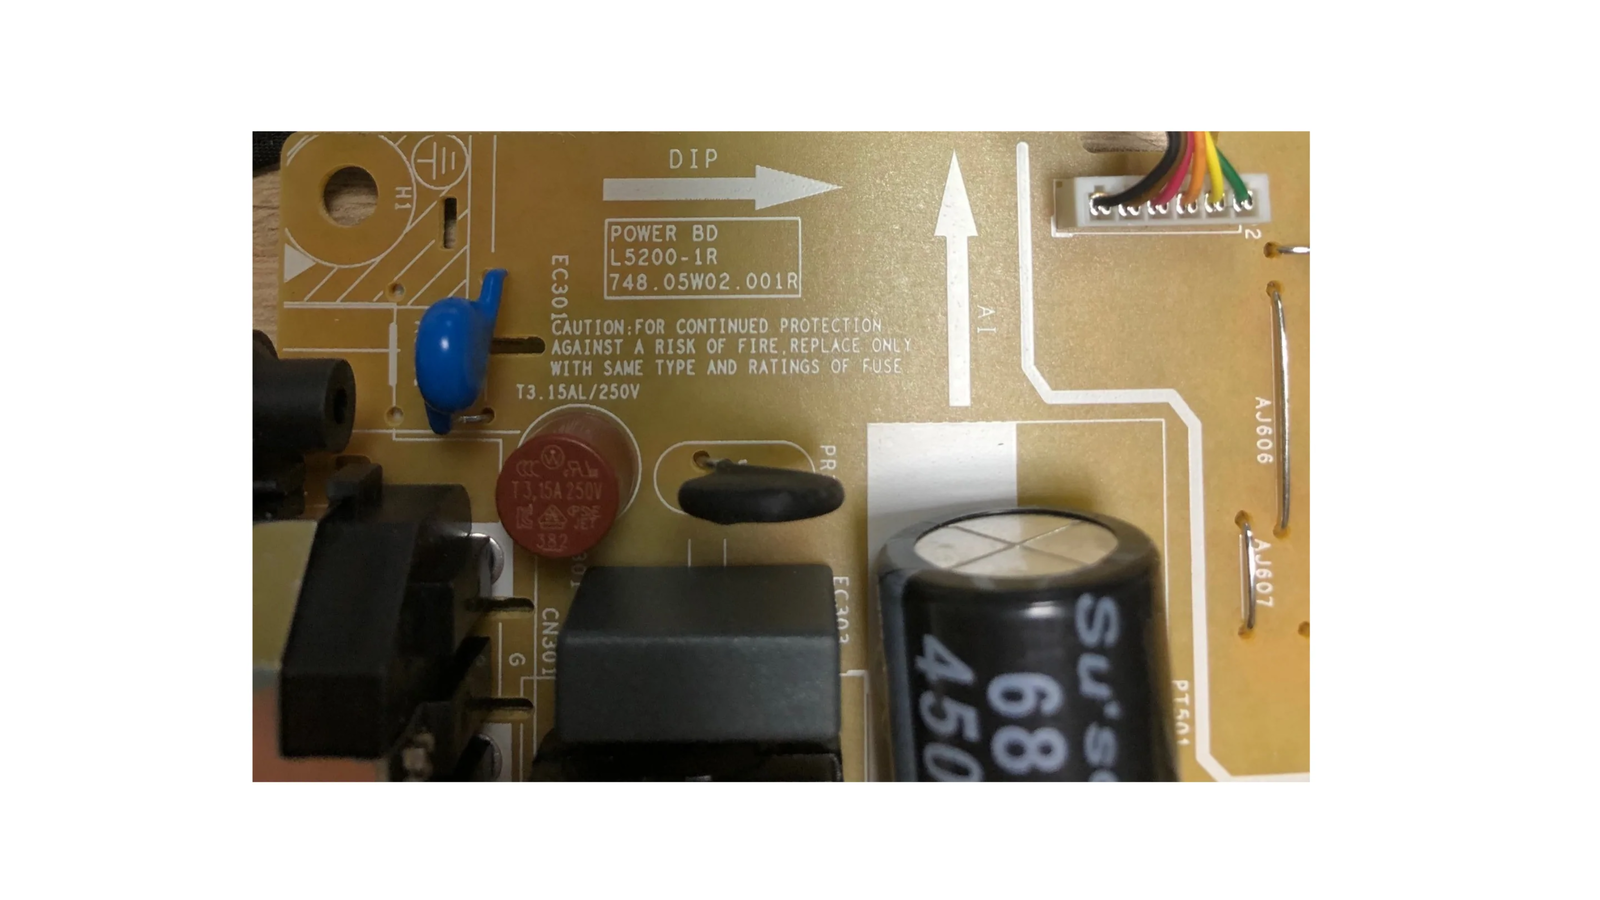 748.05W02.001R power board for Lenovo G24-10